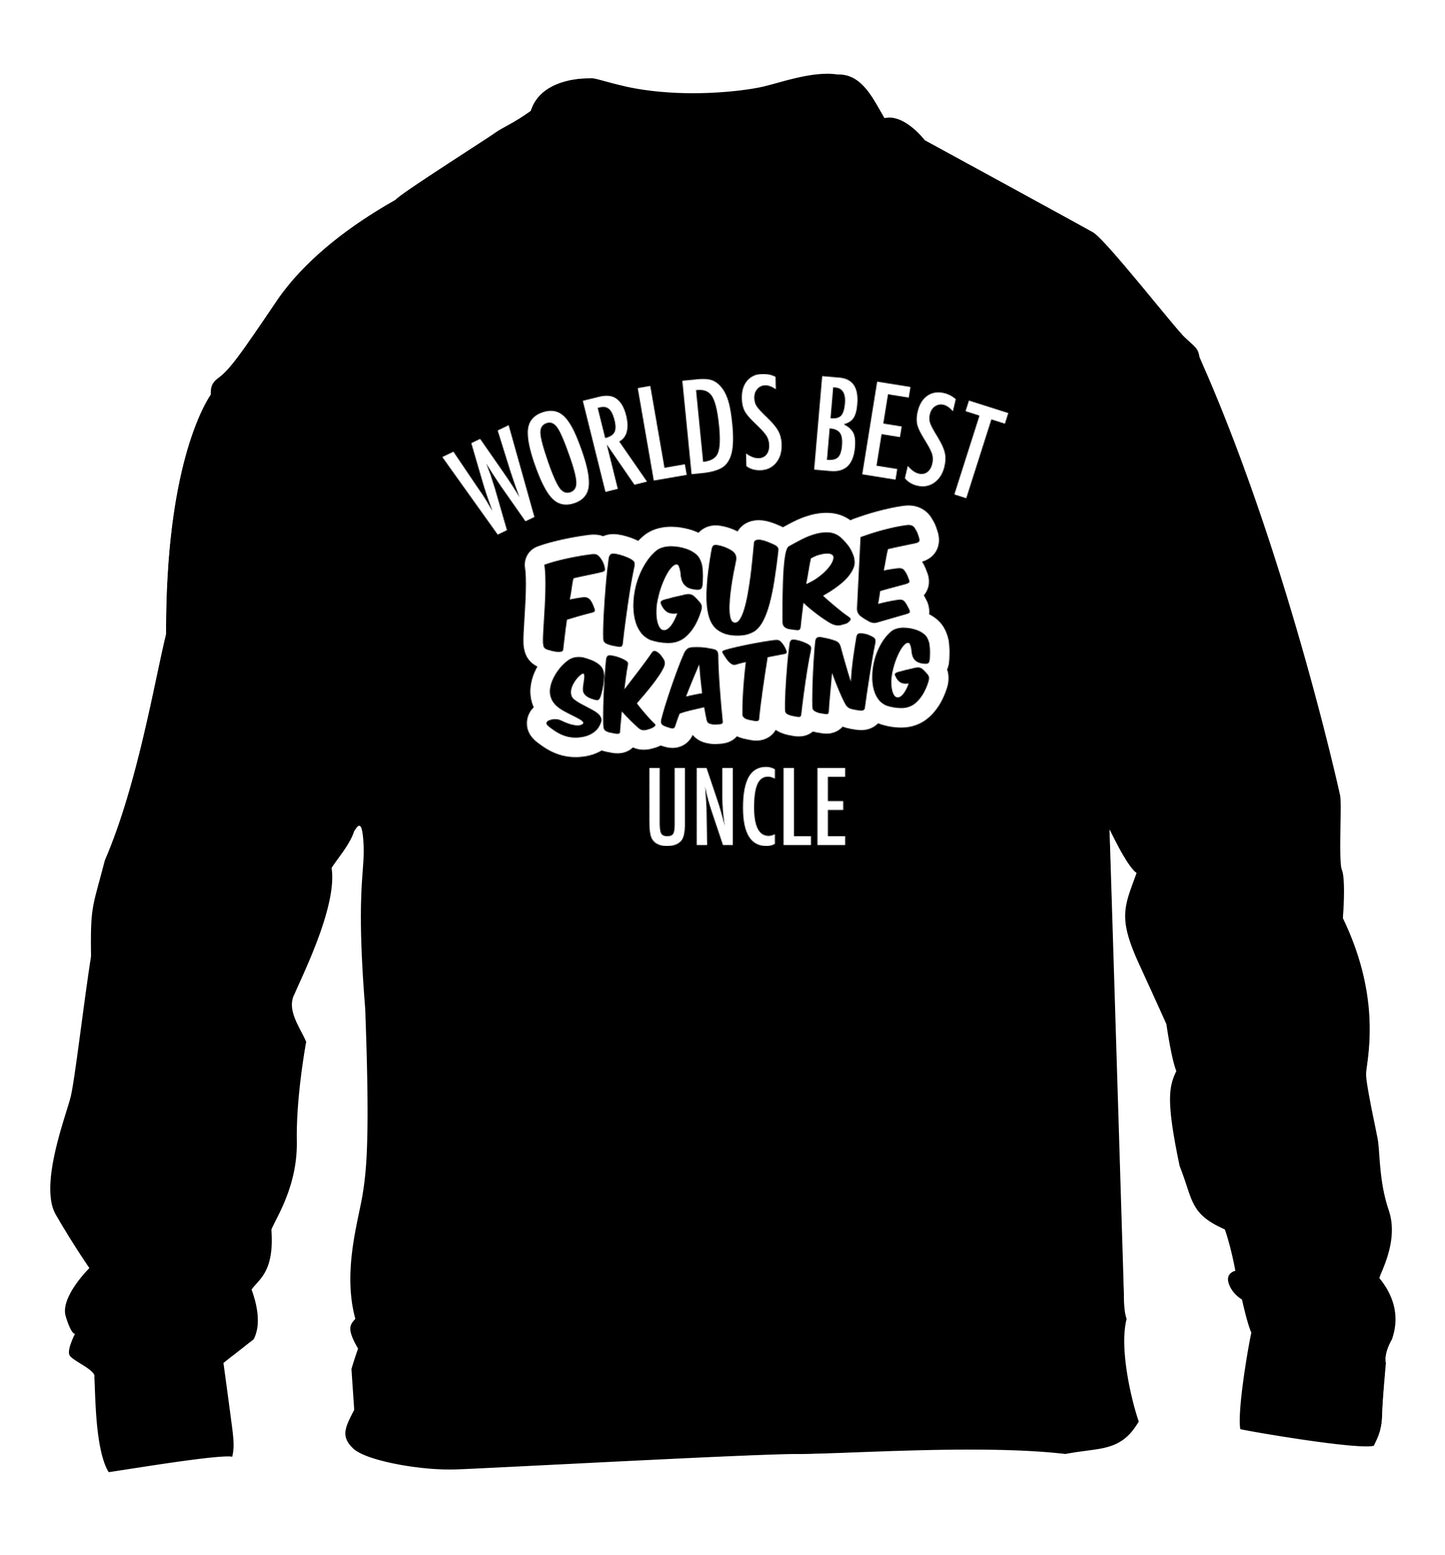 Worlds best figure skating uncle children's black sweater 12-14 Years